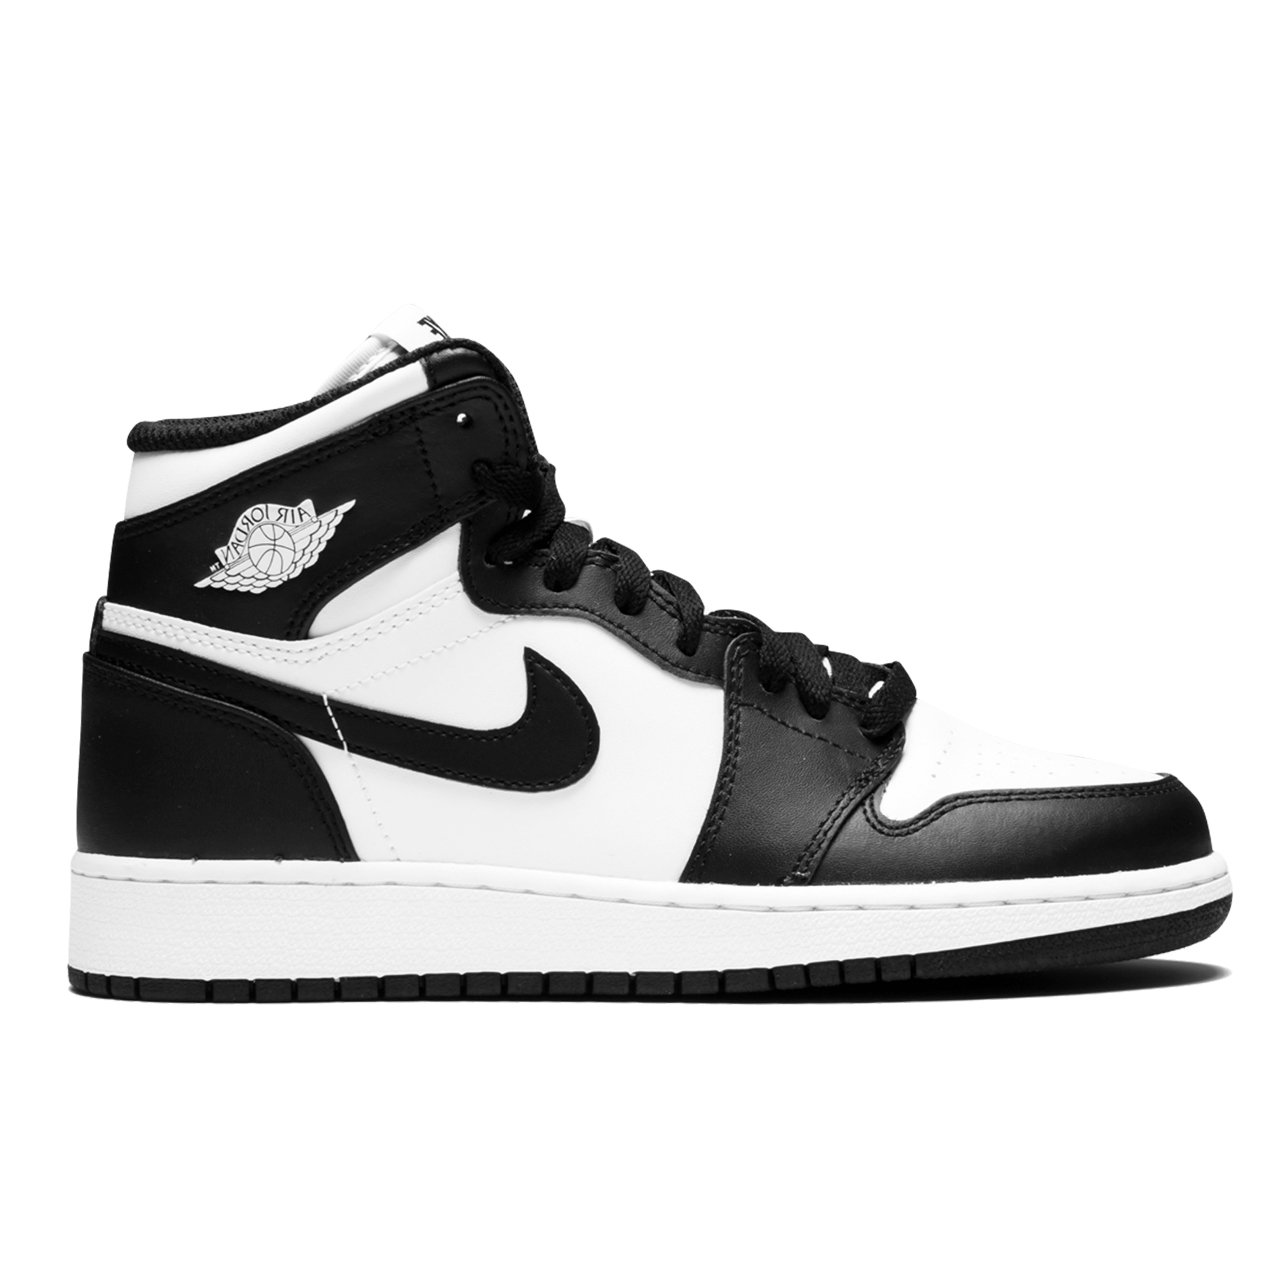 Nike Air Jordan 1 Retro Black White 